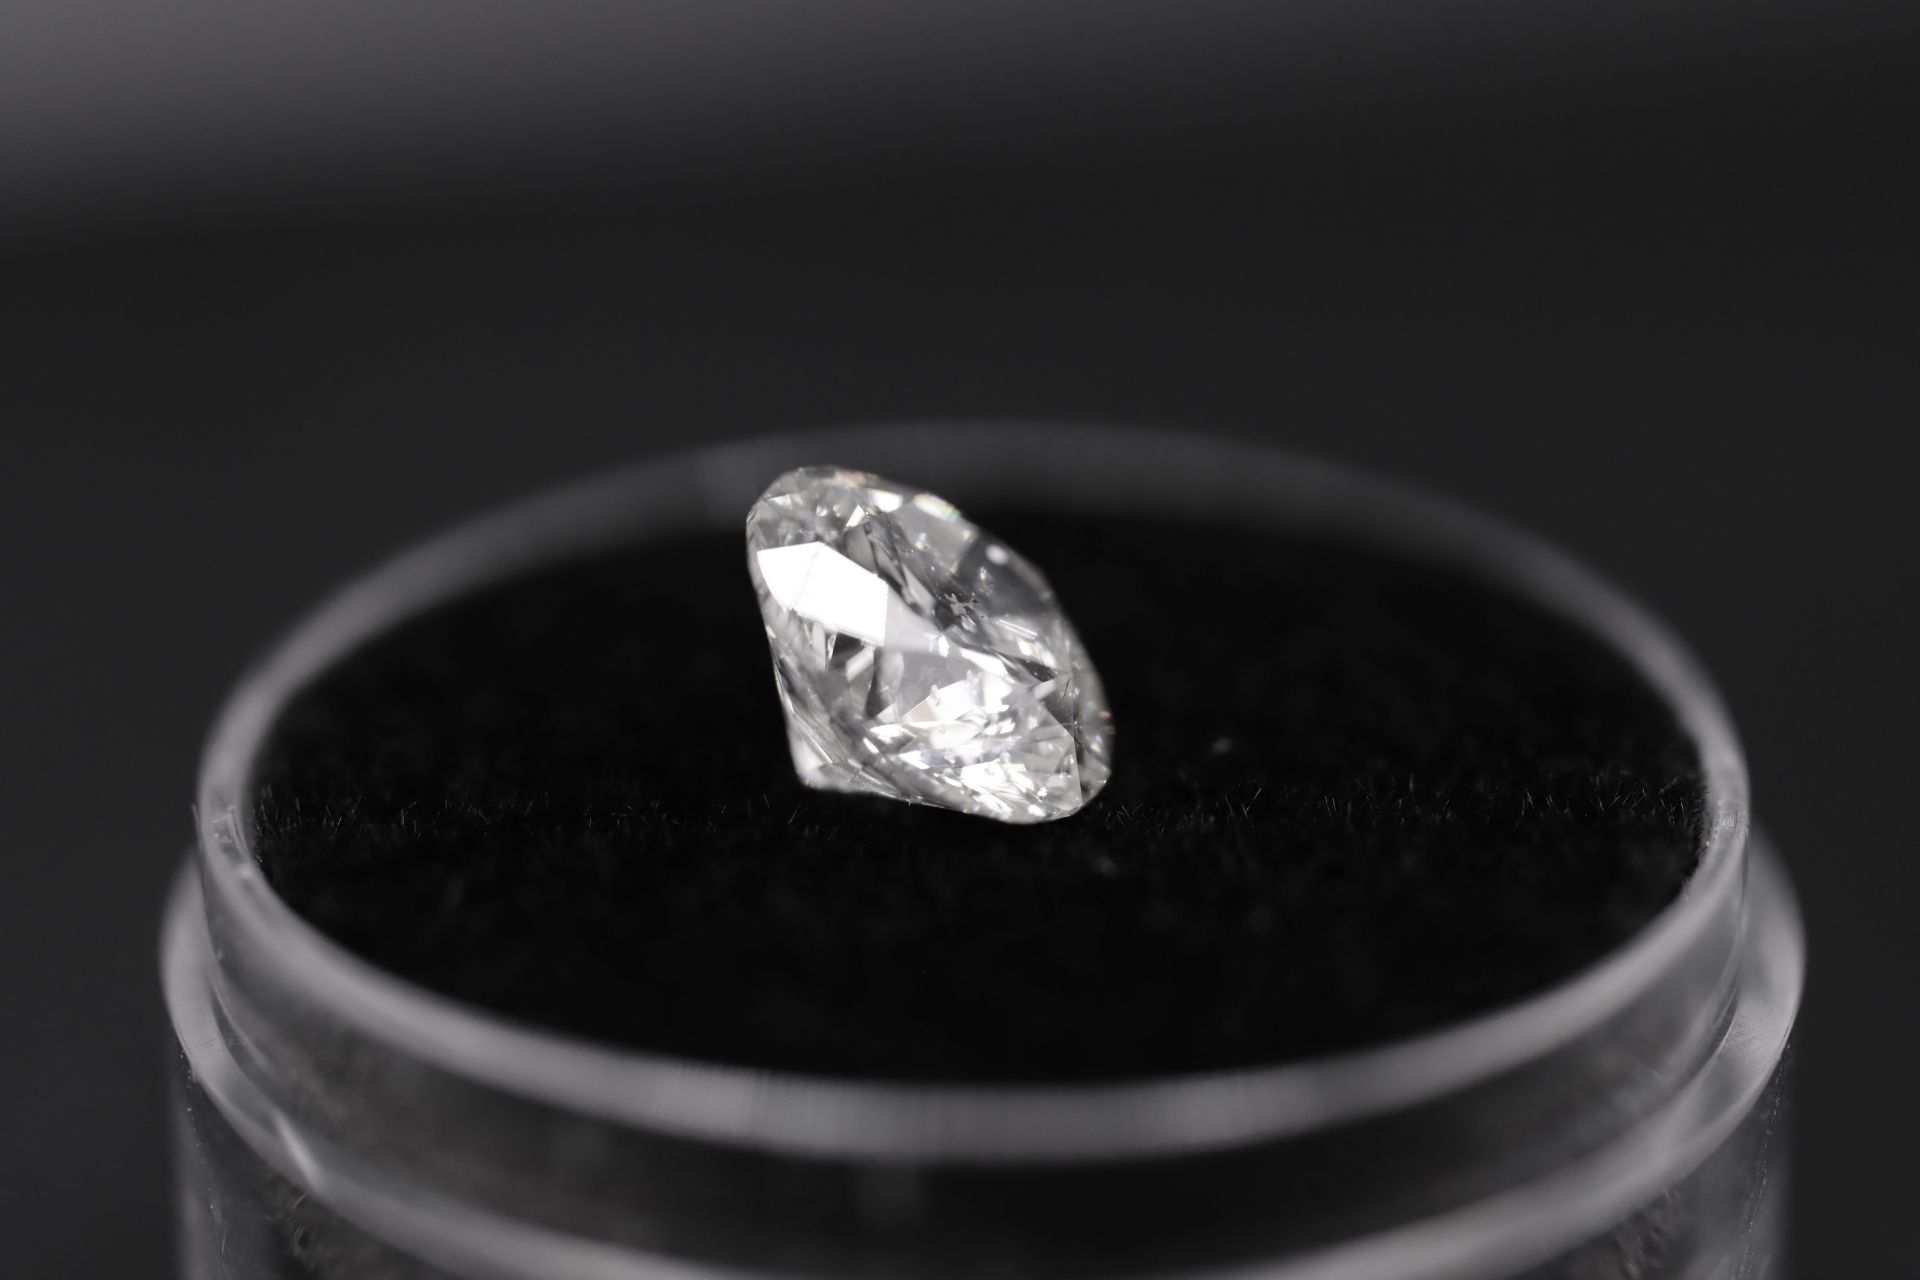 Round Brilliant Cut Natural Diamond 2.01 Carat Colour D Clarity VS1 - DGI Certificate - Image 17 of 24